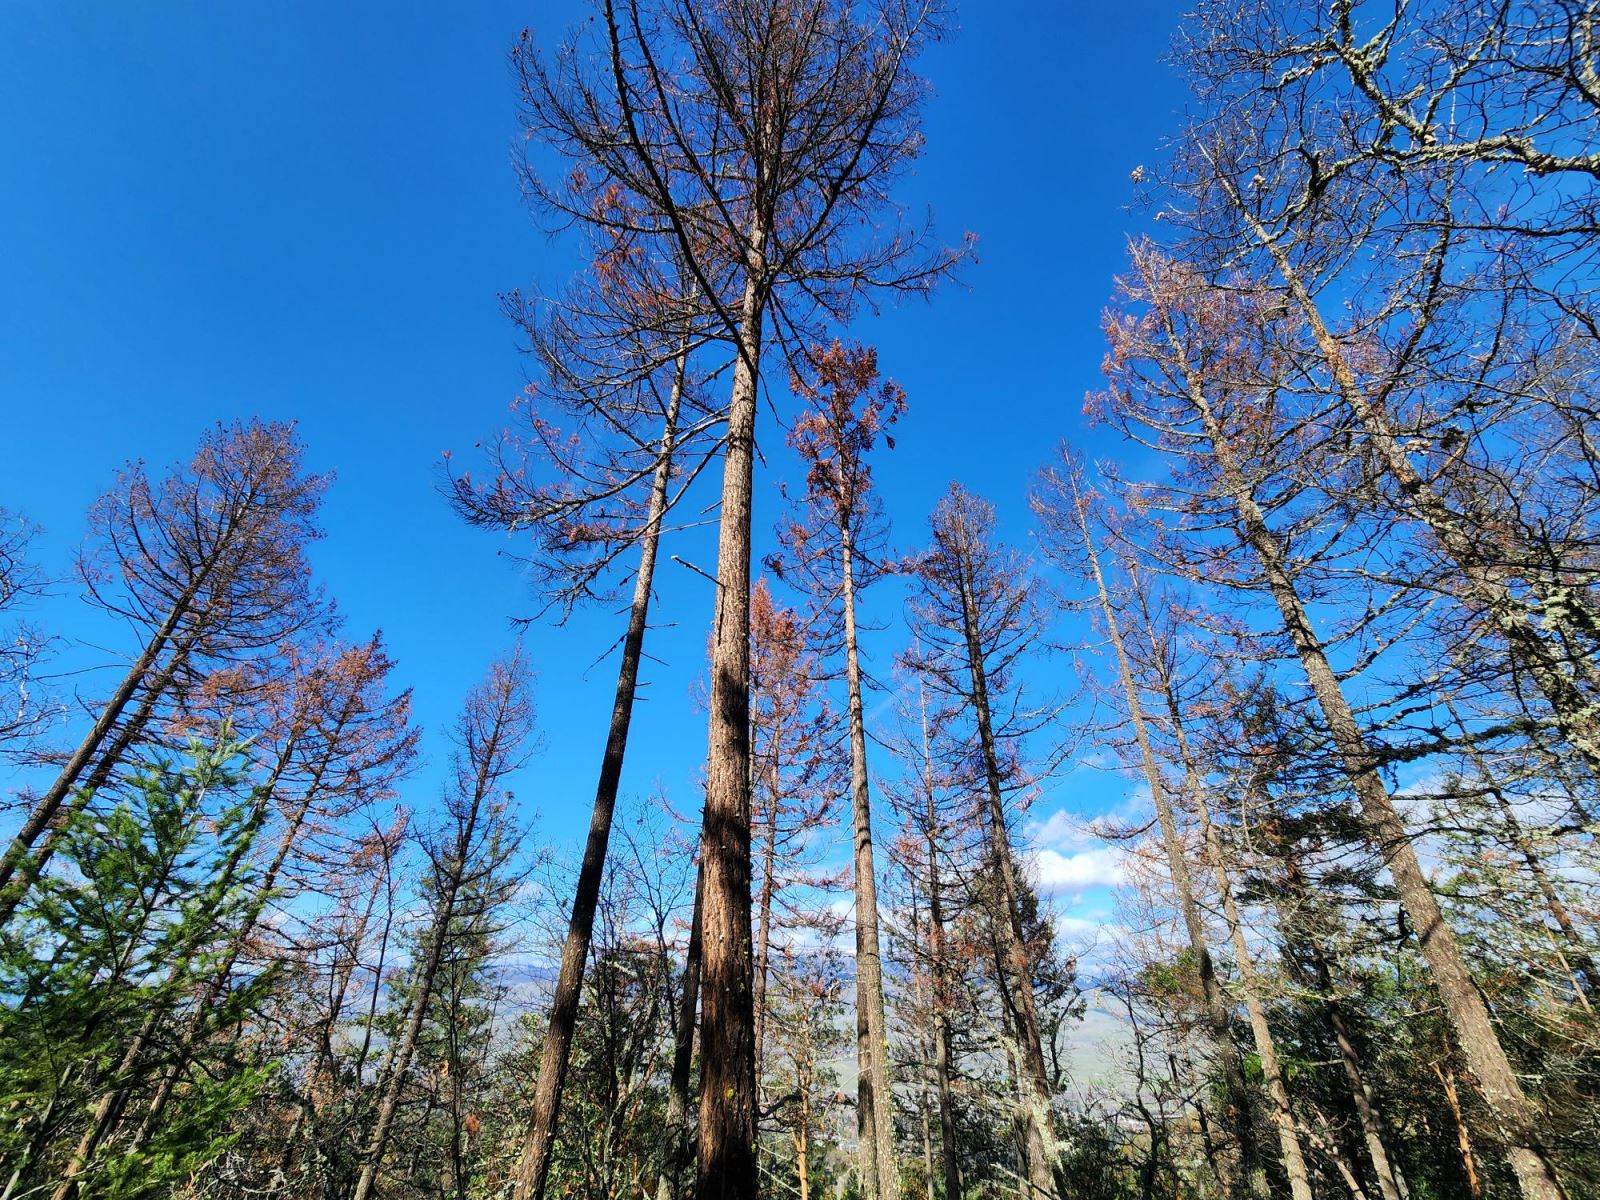 Dead trees in Siskiyou Mountain Park